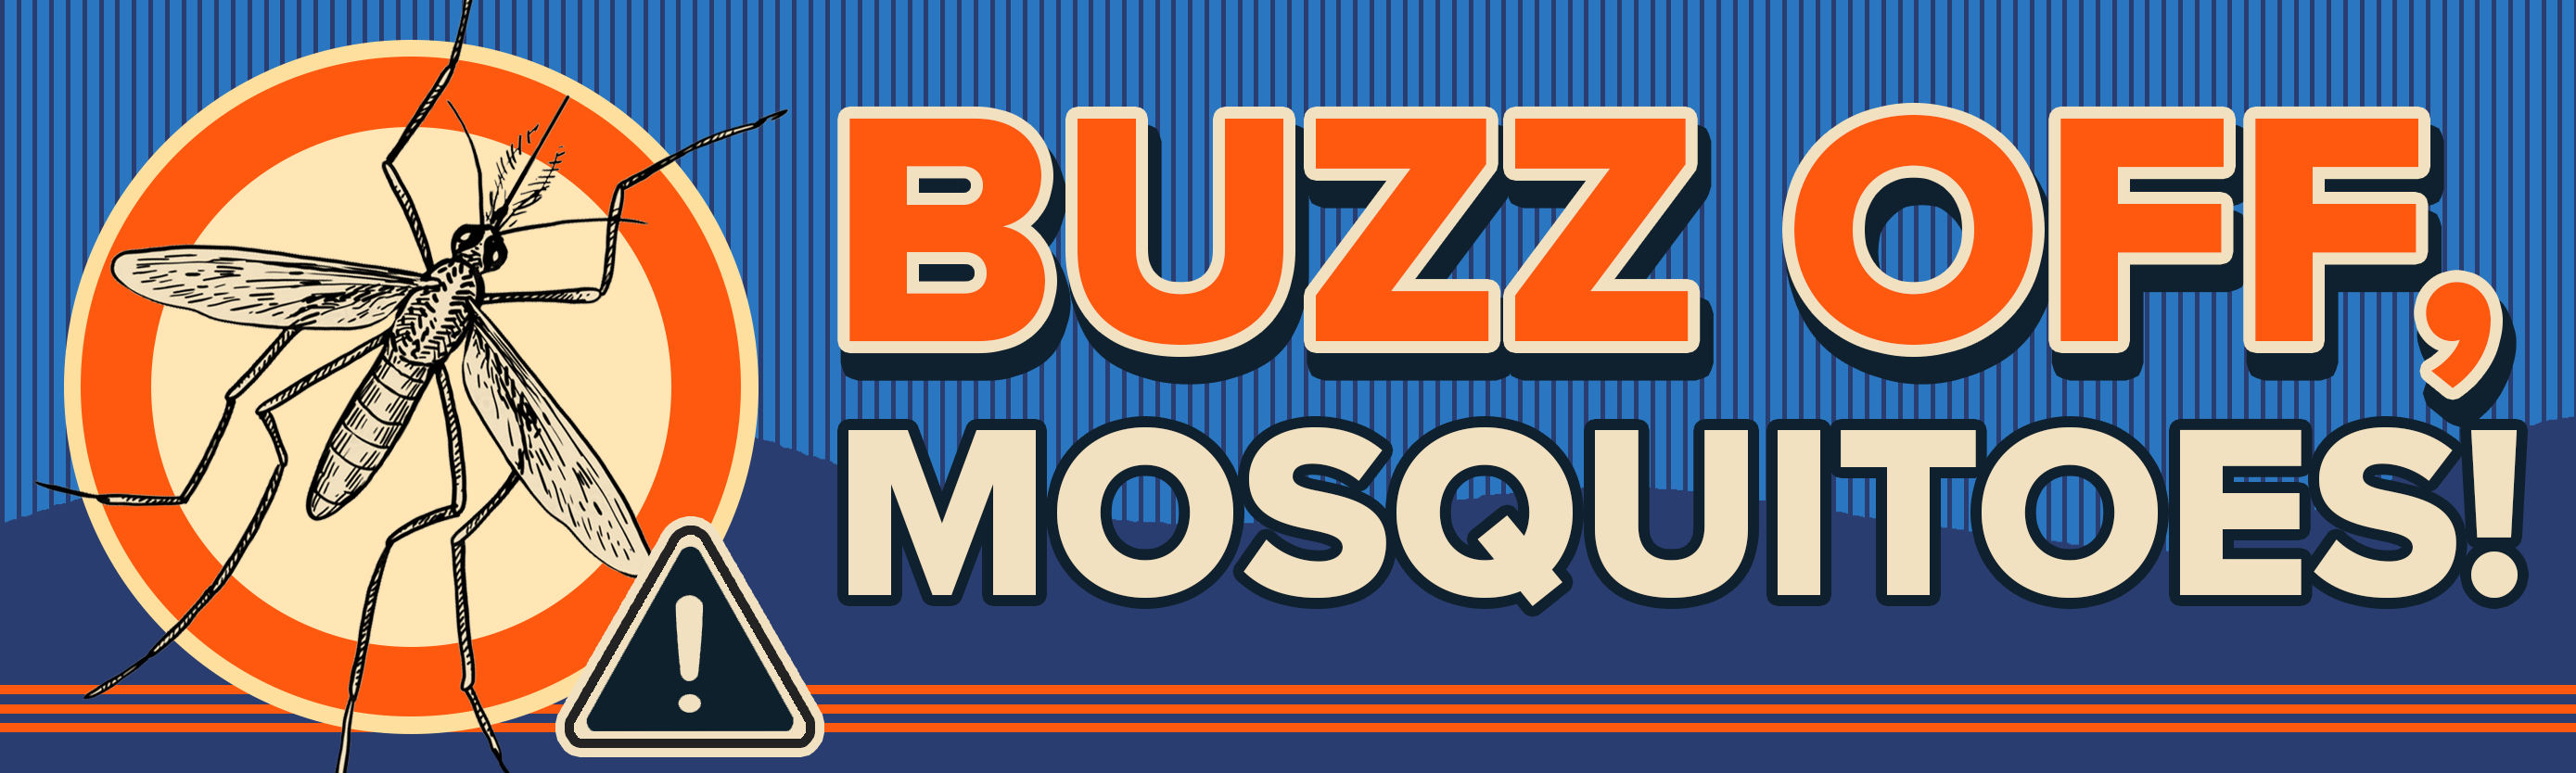 Buzz Off Mosquitos